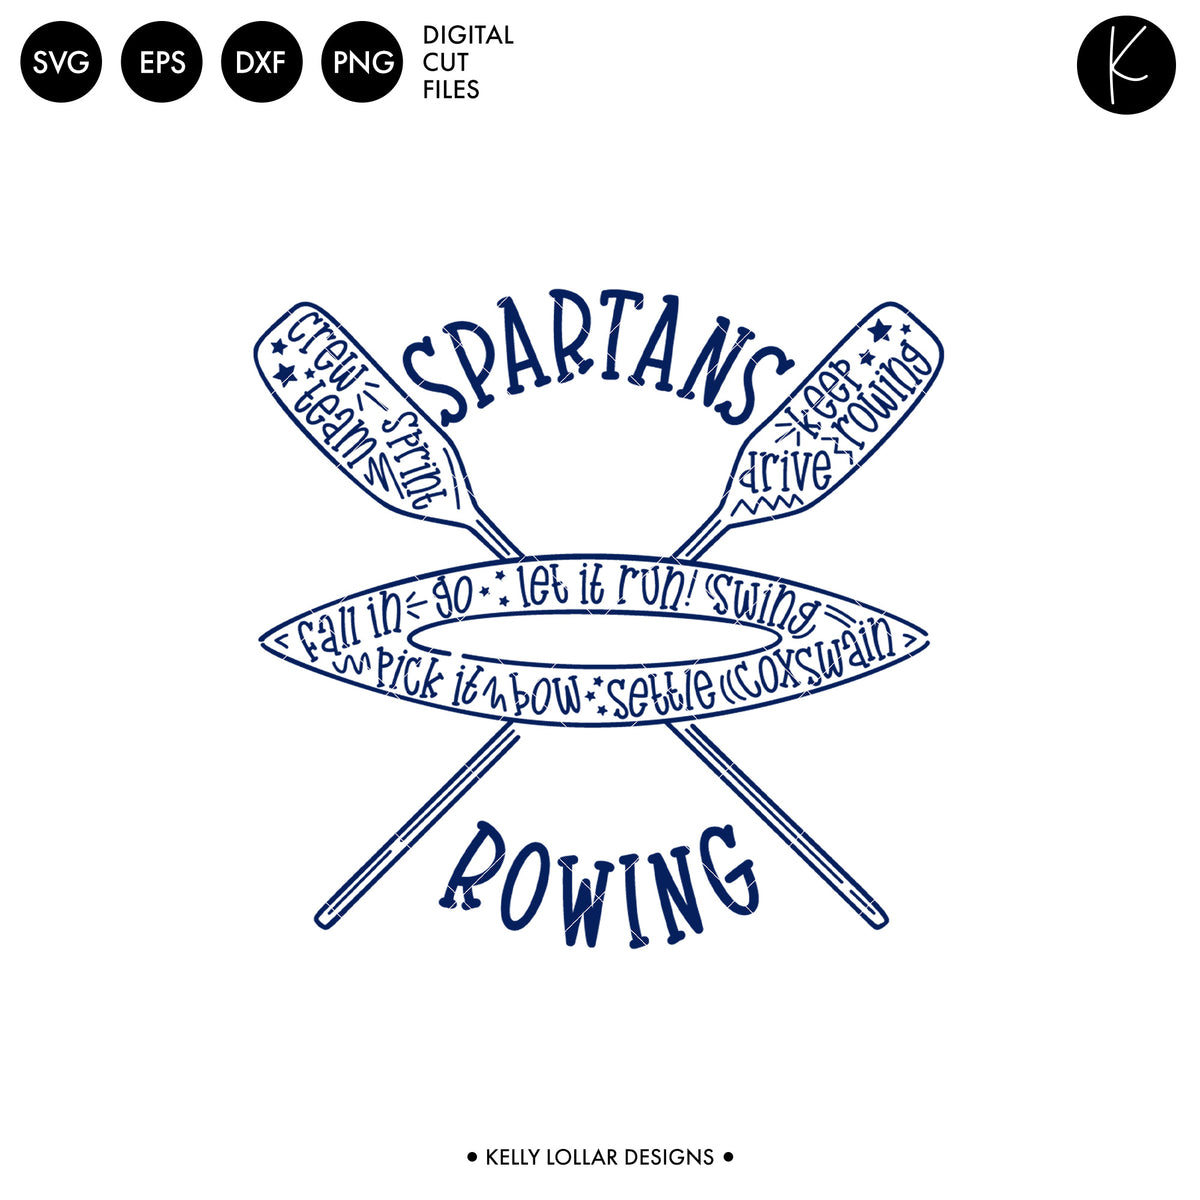 Spartans Rowing Crew Bundle | SVG DXF EPS PNG Cut Files